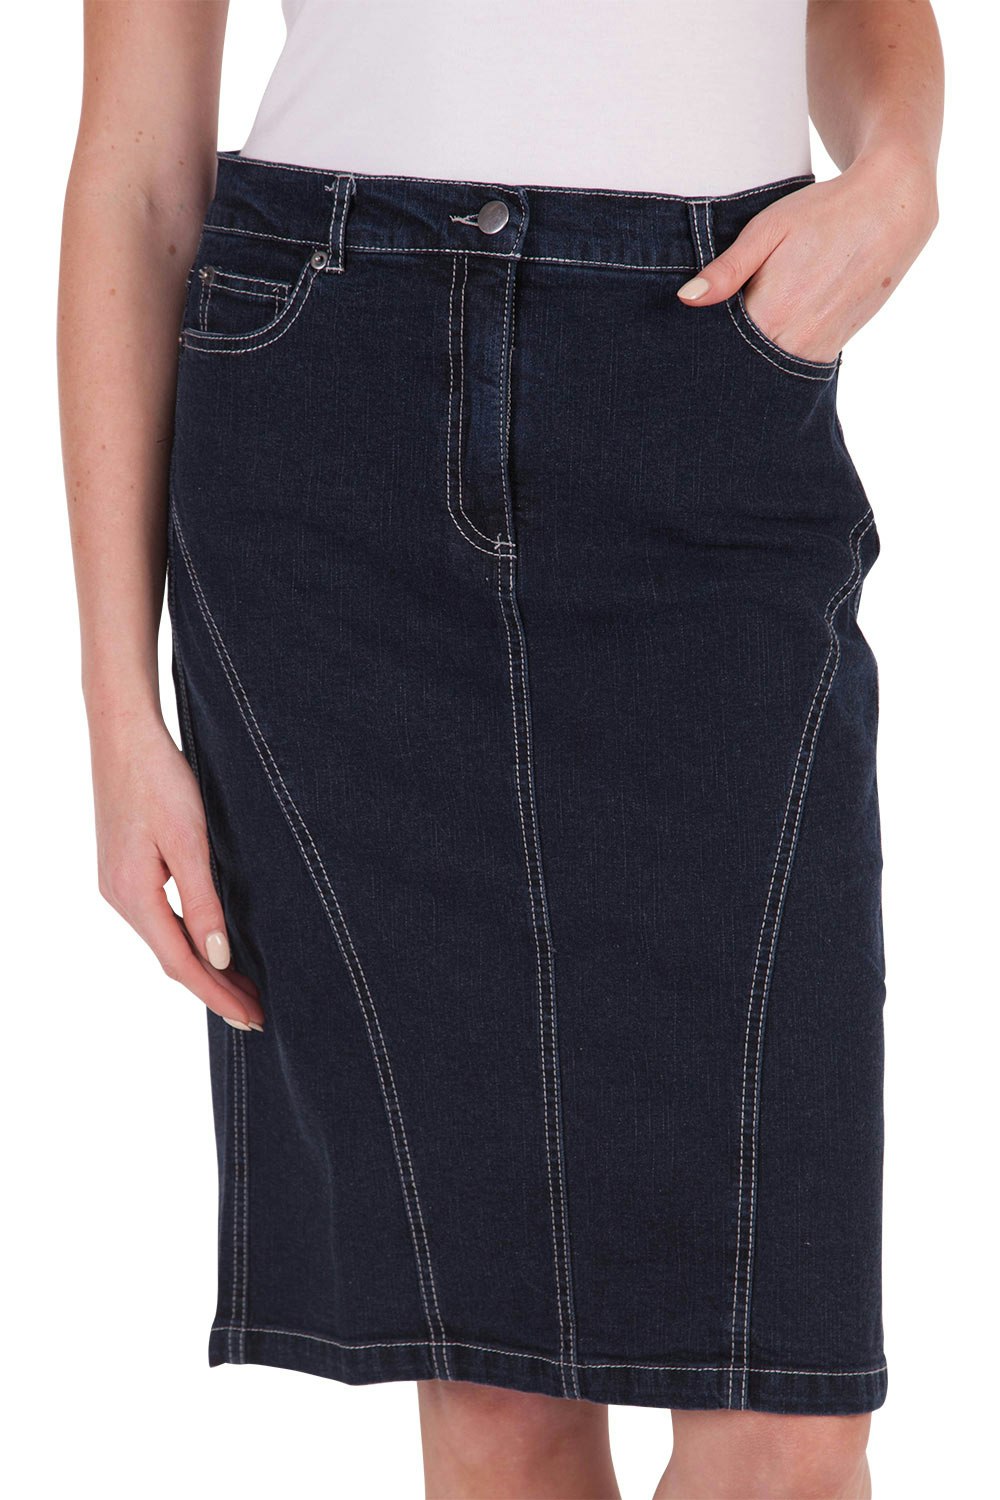 Gordon Smith clothing Miracle Denim Skirt - Womens Knee Length Skirts ...